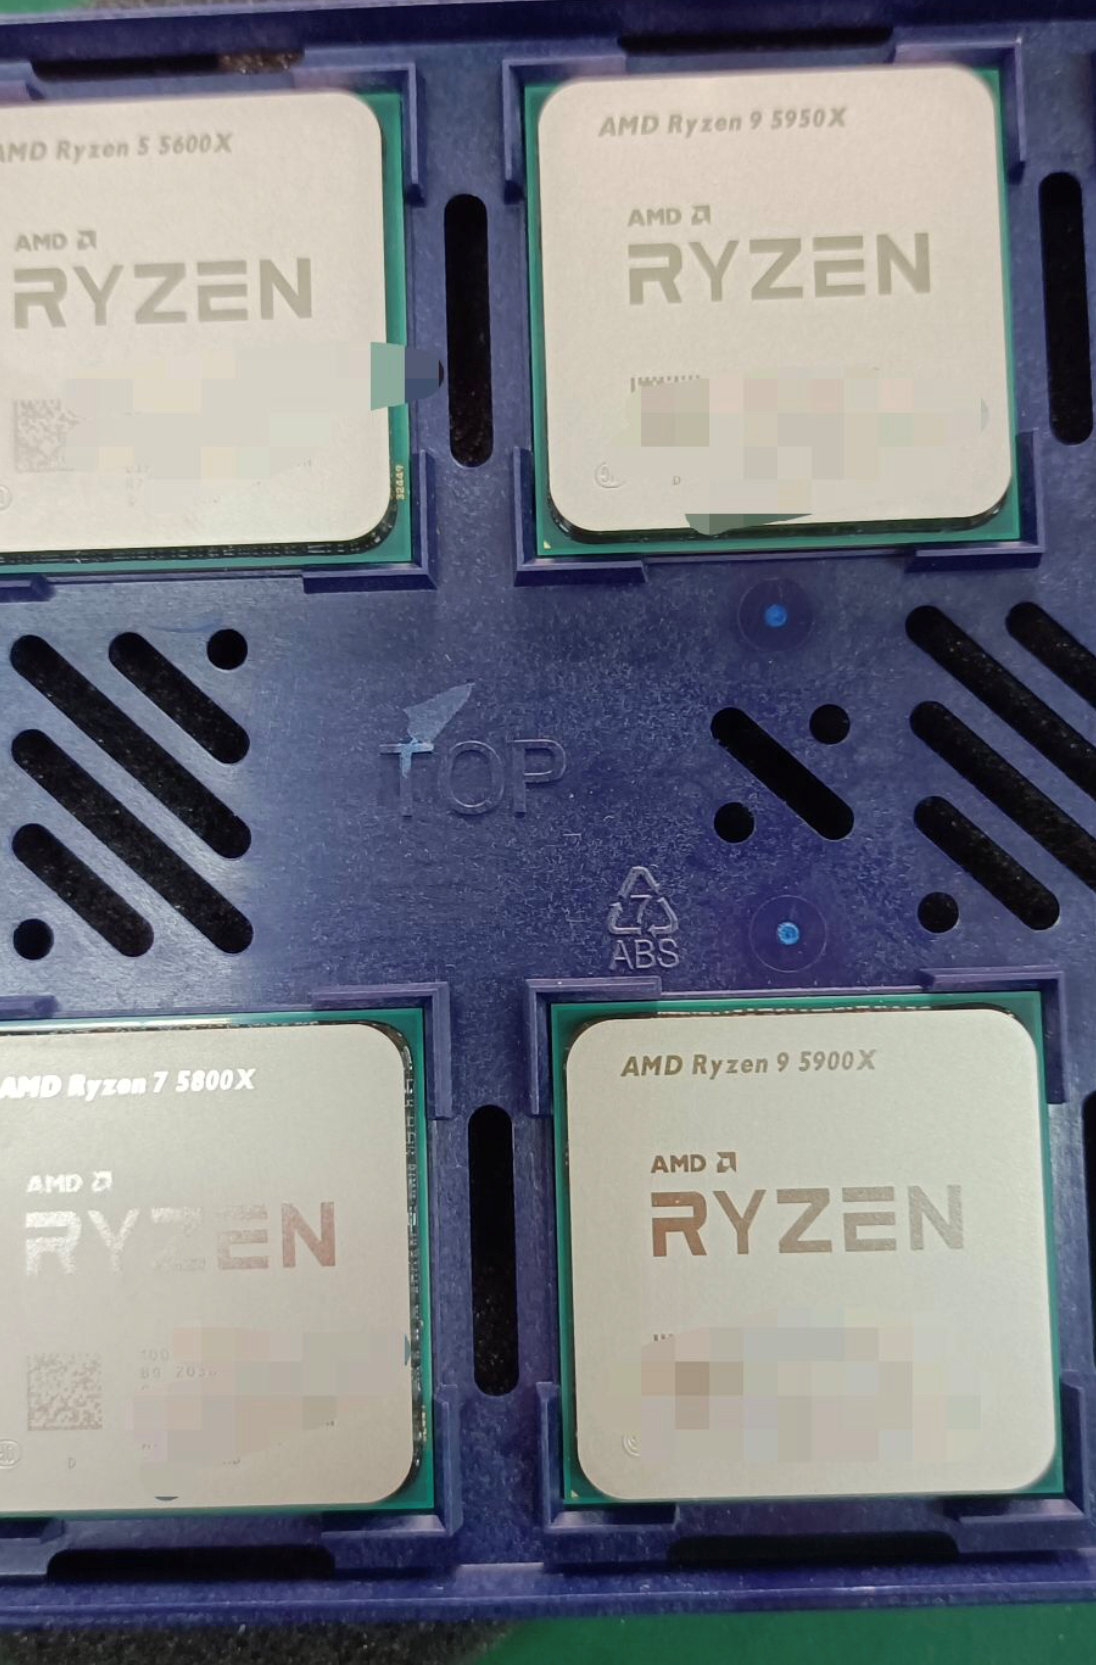 AMD Ryzen 9 5950X and Ryzen 9 5900X Geekbench 5 scores leak